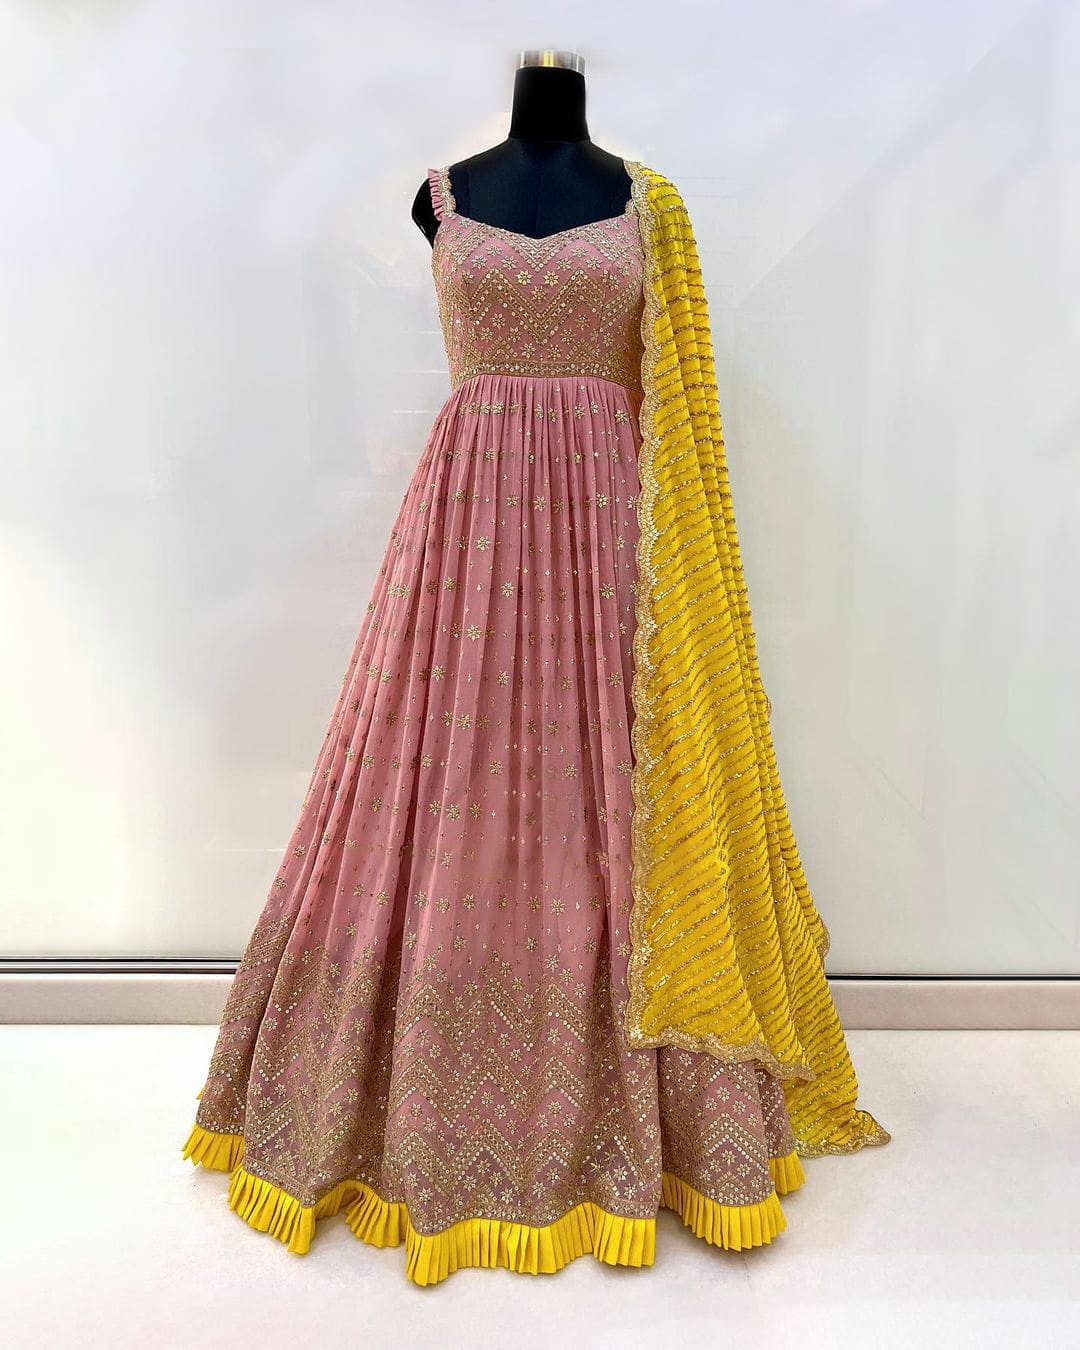 Pinterest: @pawank90 | Indian dresses, Indian wedding gowns, Indian wedding  dress